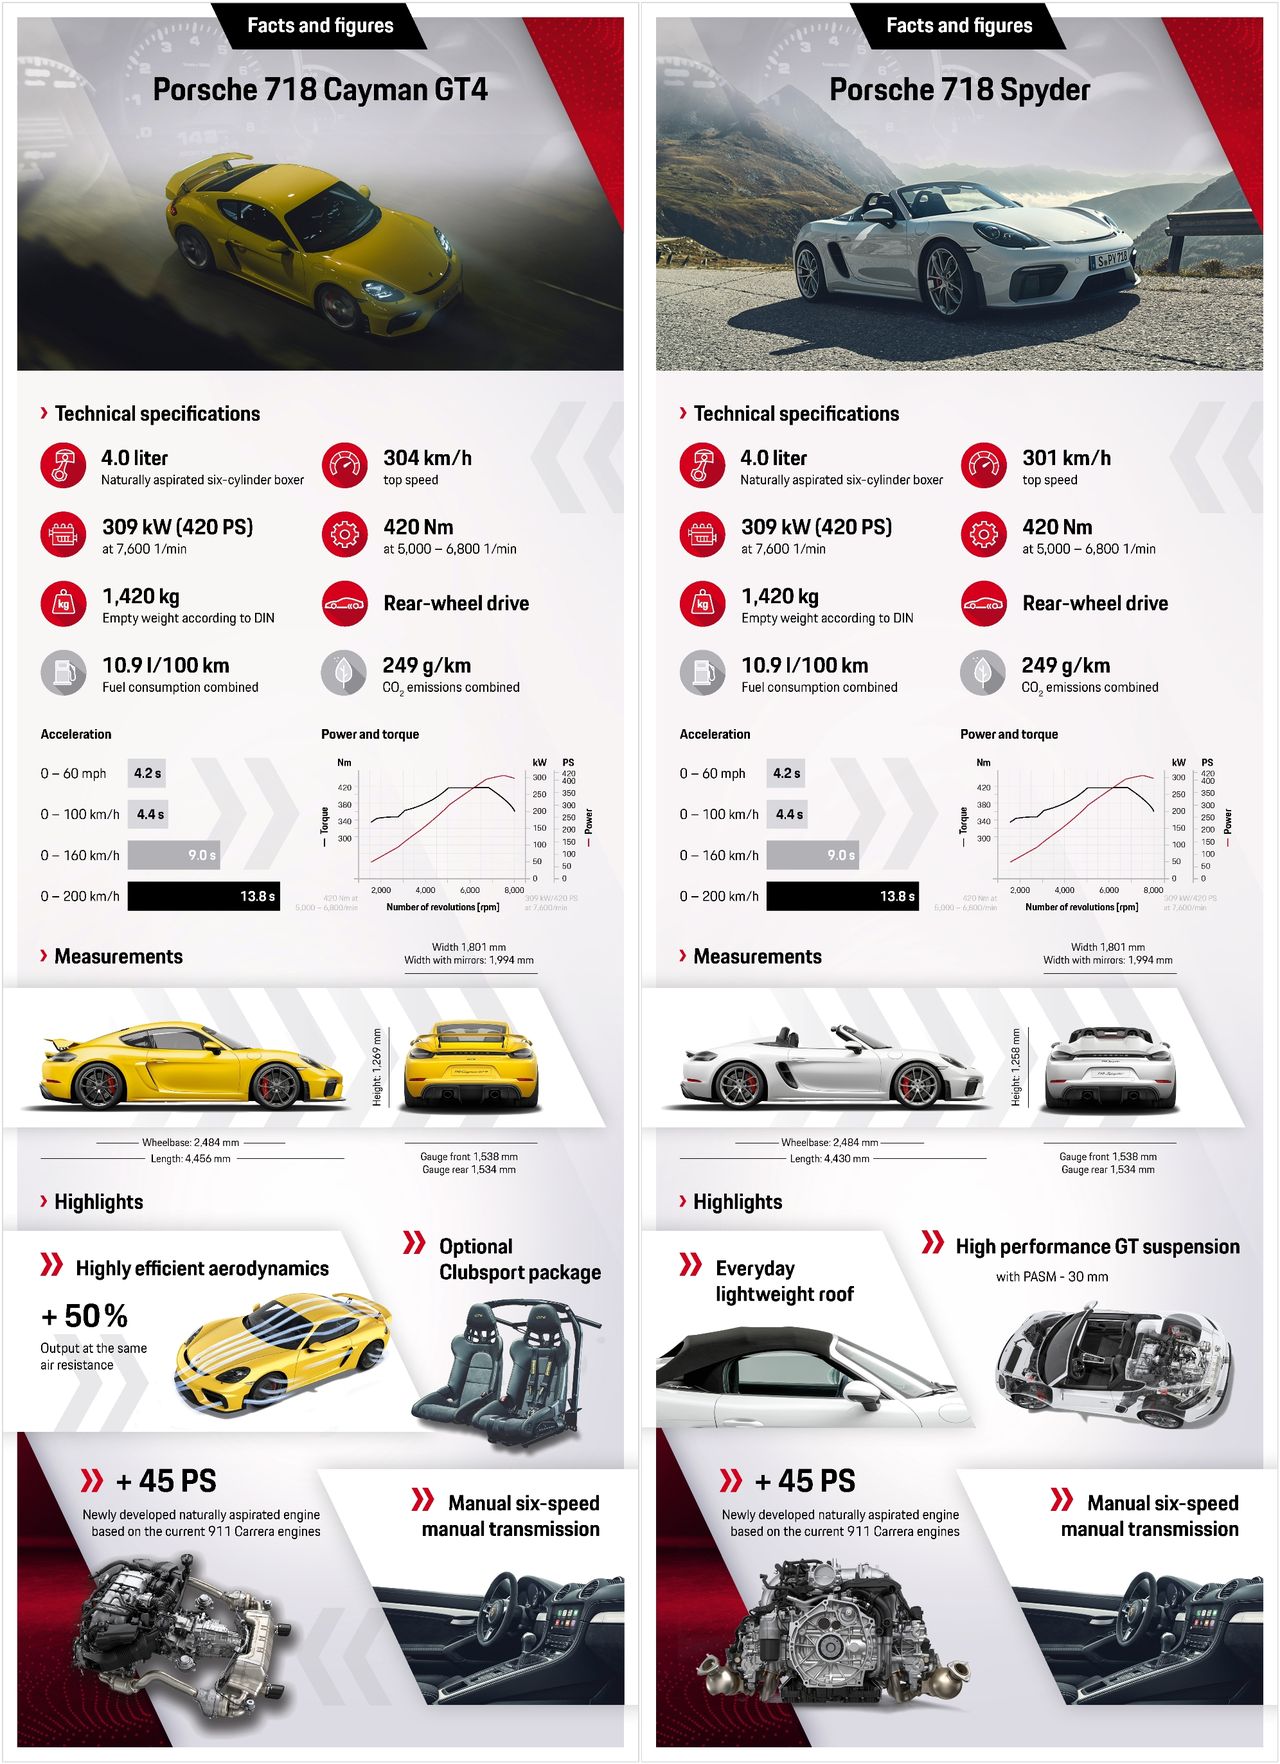 Dane techniczne Porsche 718 Cayman GT4 i Spyder